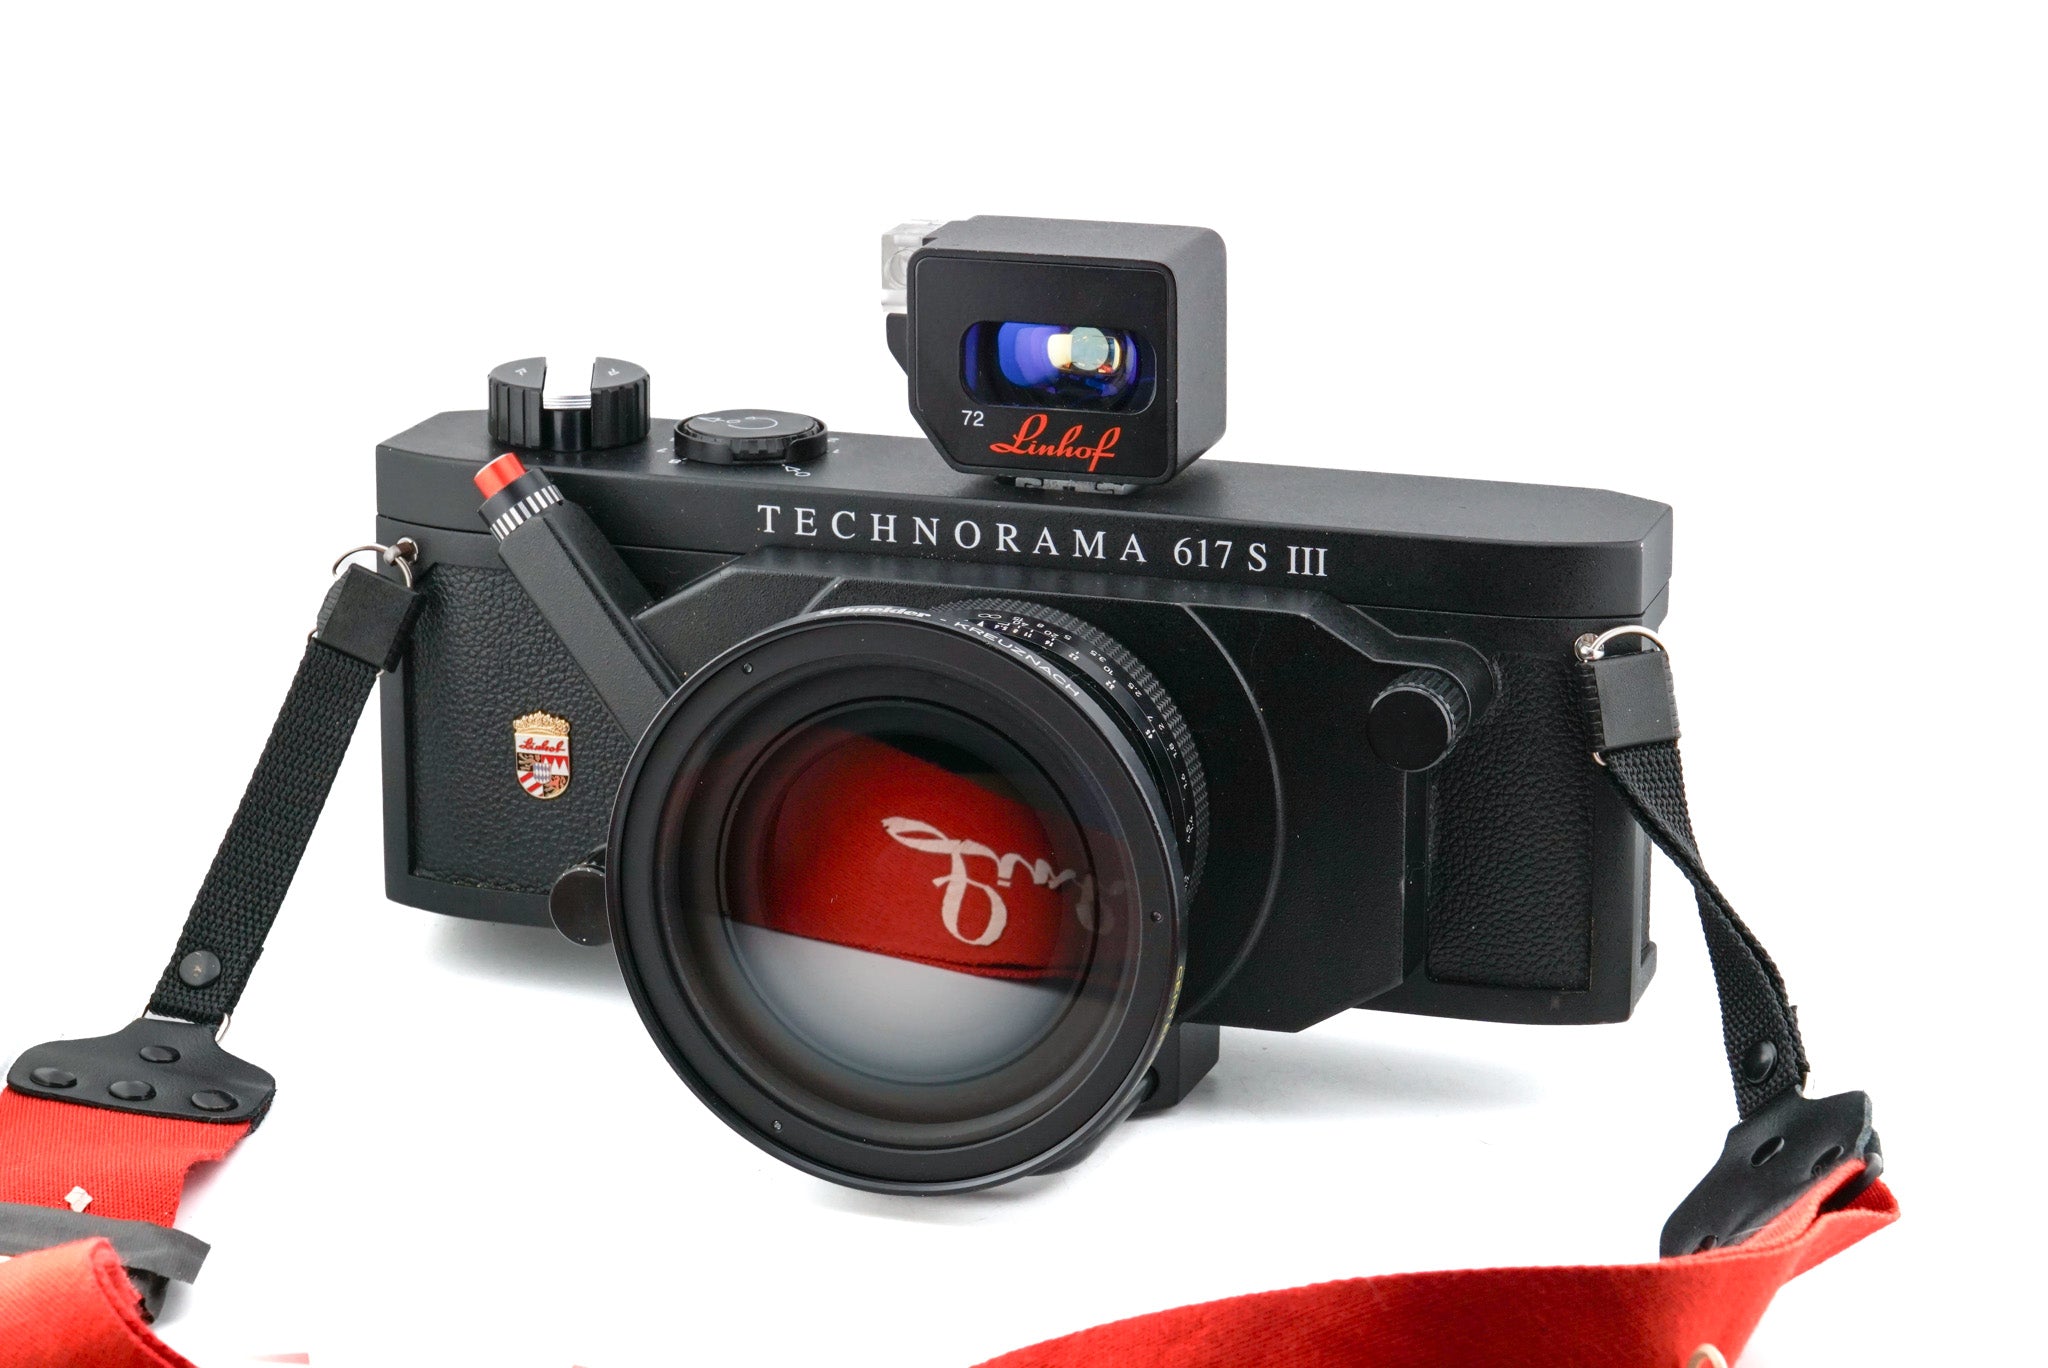 Linhof 72mm f5.6 Super Angulon XL Lens for the Technorama 617 SIII  Panoramic Camera.